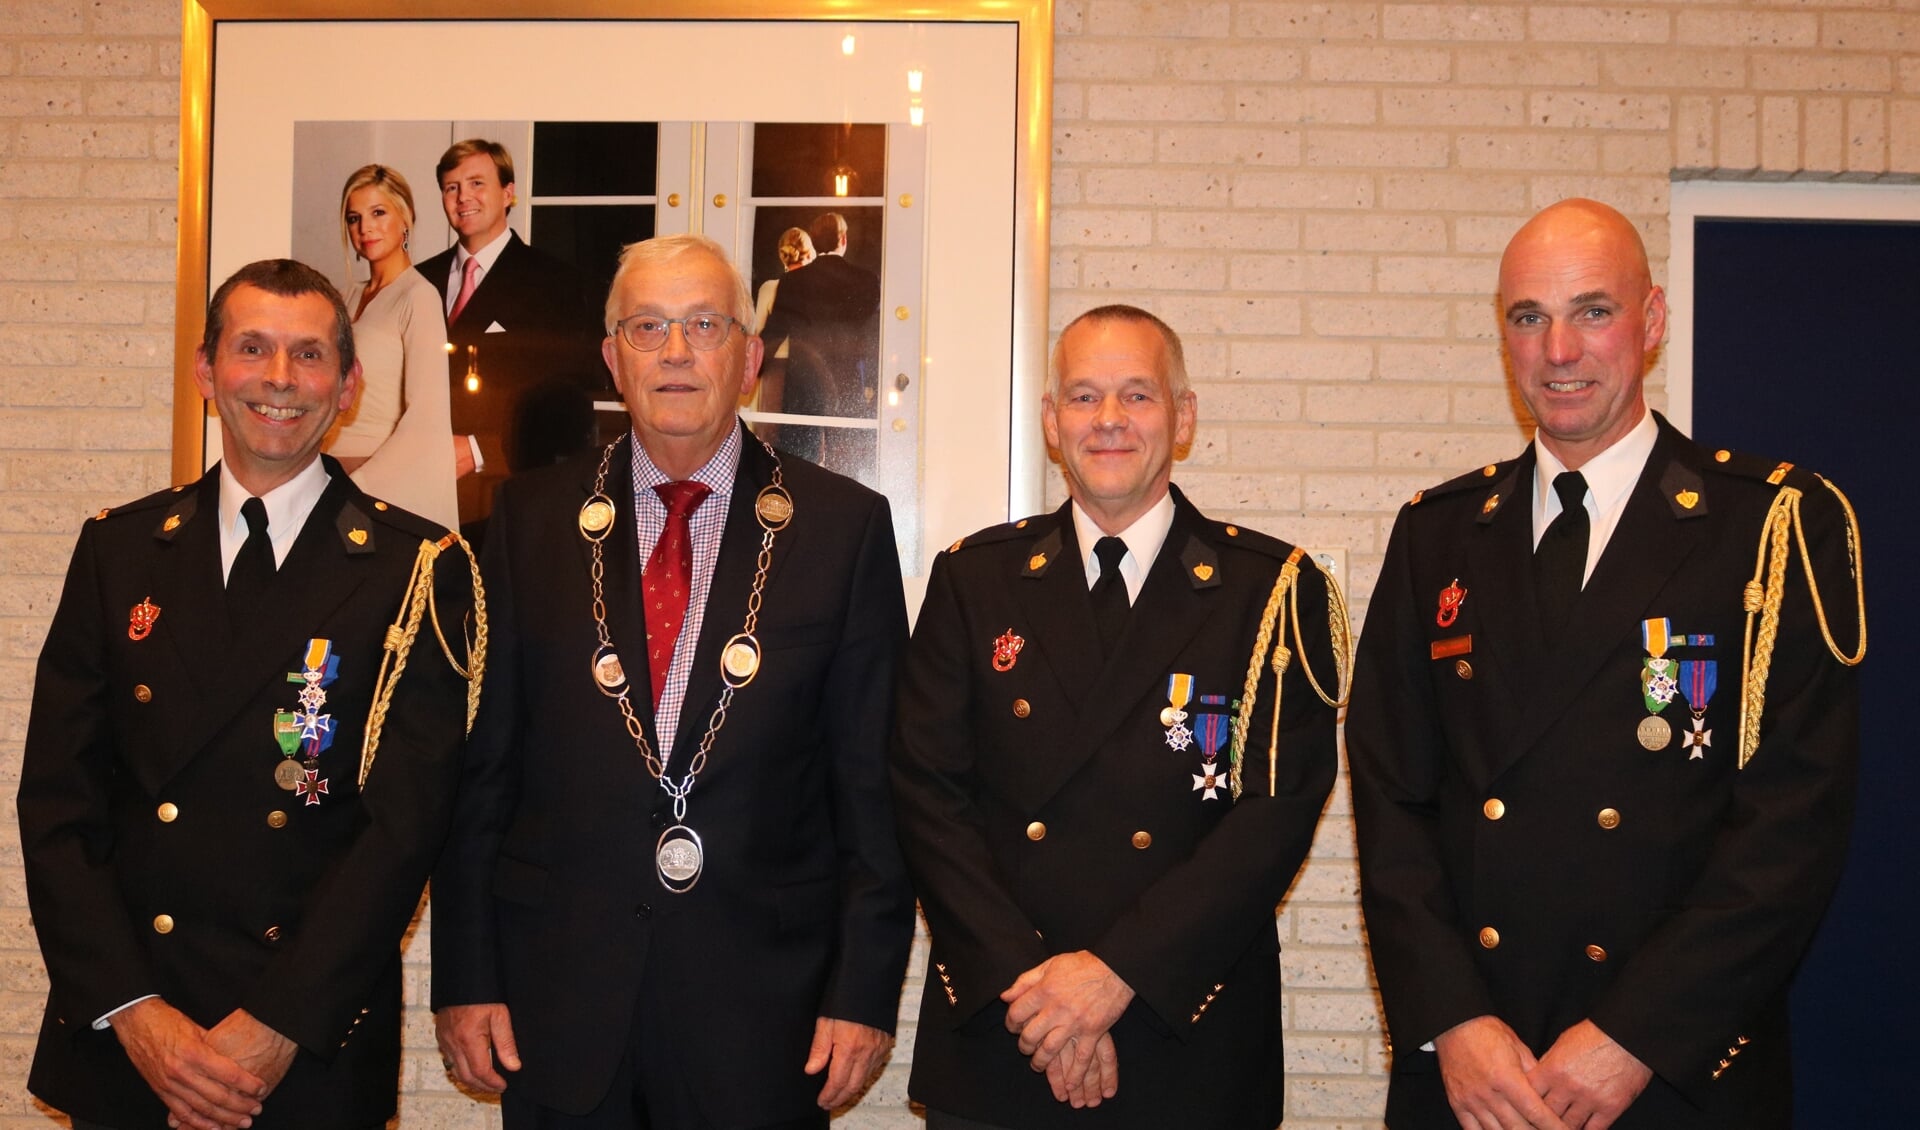 V.l.n.r: Gerard Pronk, burgemeester Nijpels, Gerard Smook en Richard Langedijk. 